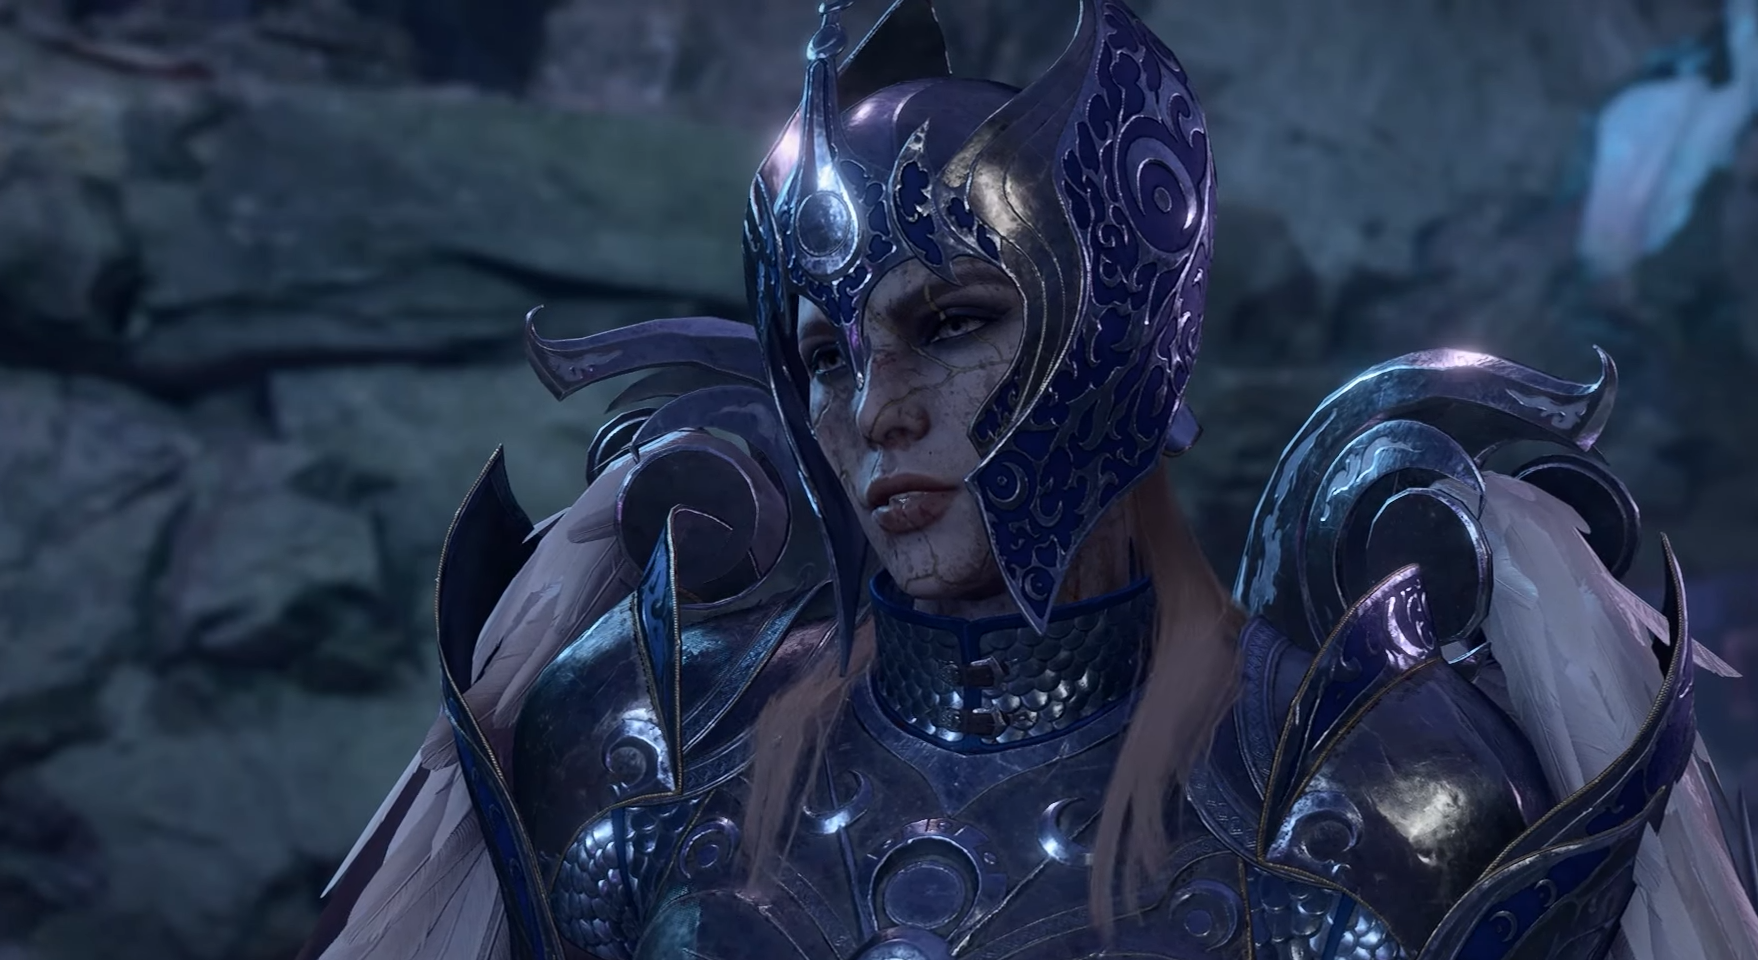 The Nightsong in her dark armor looks down in Baldur's Gate 3